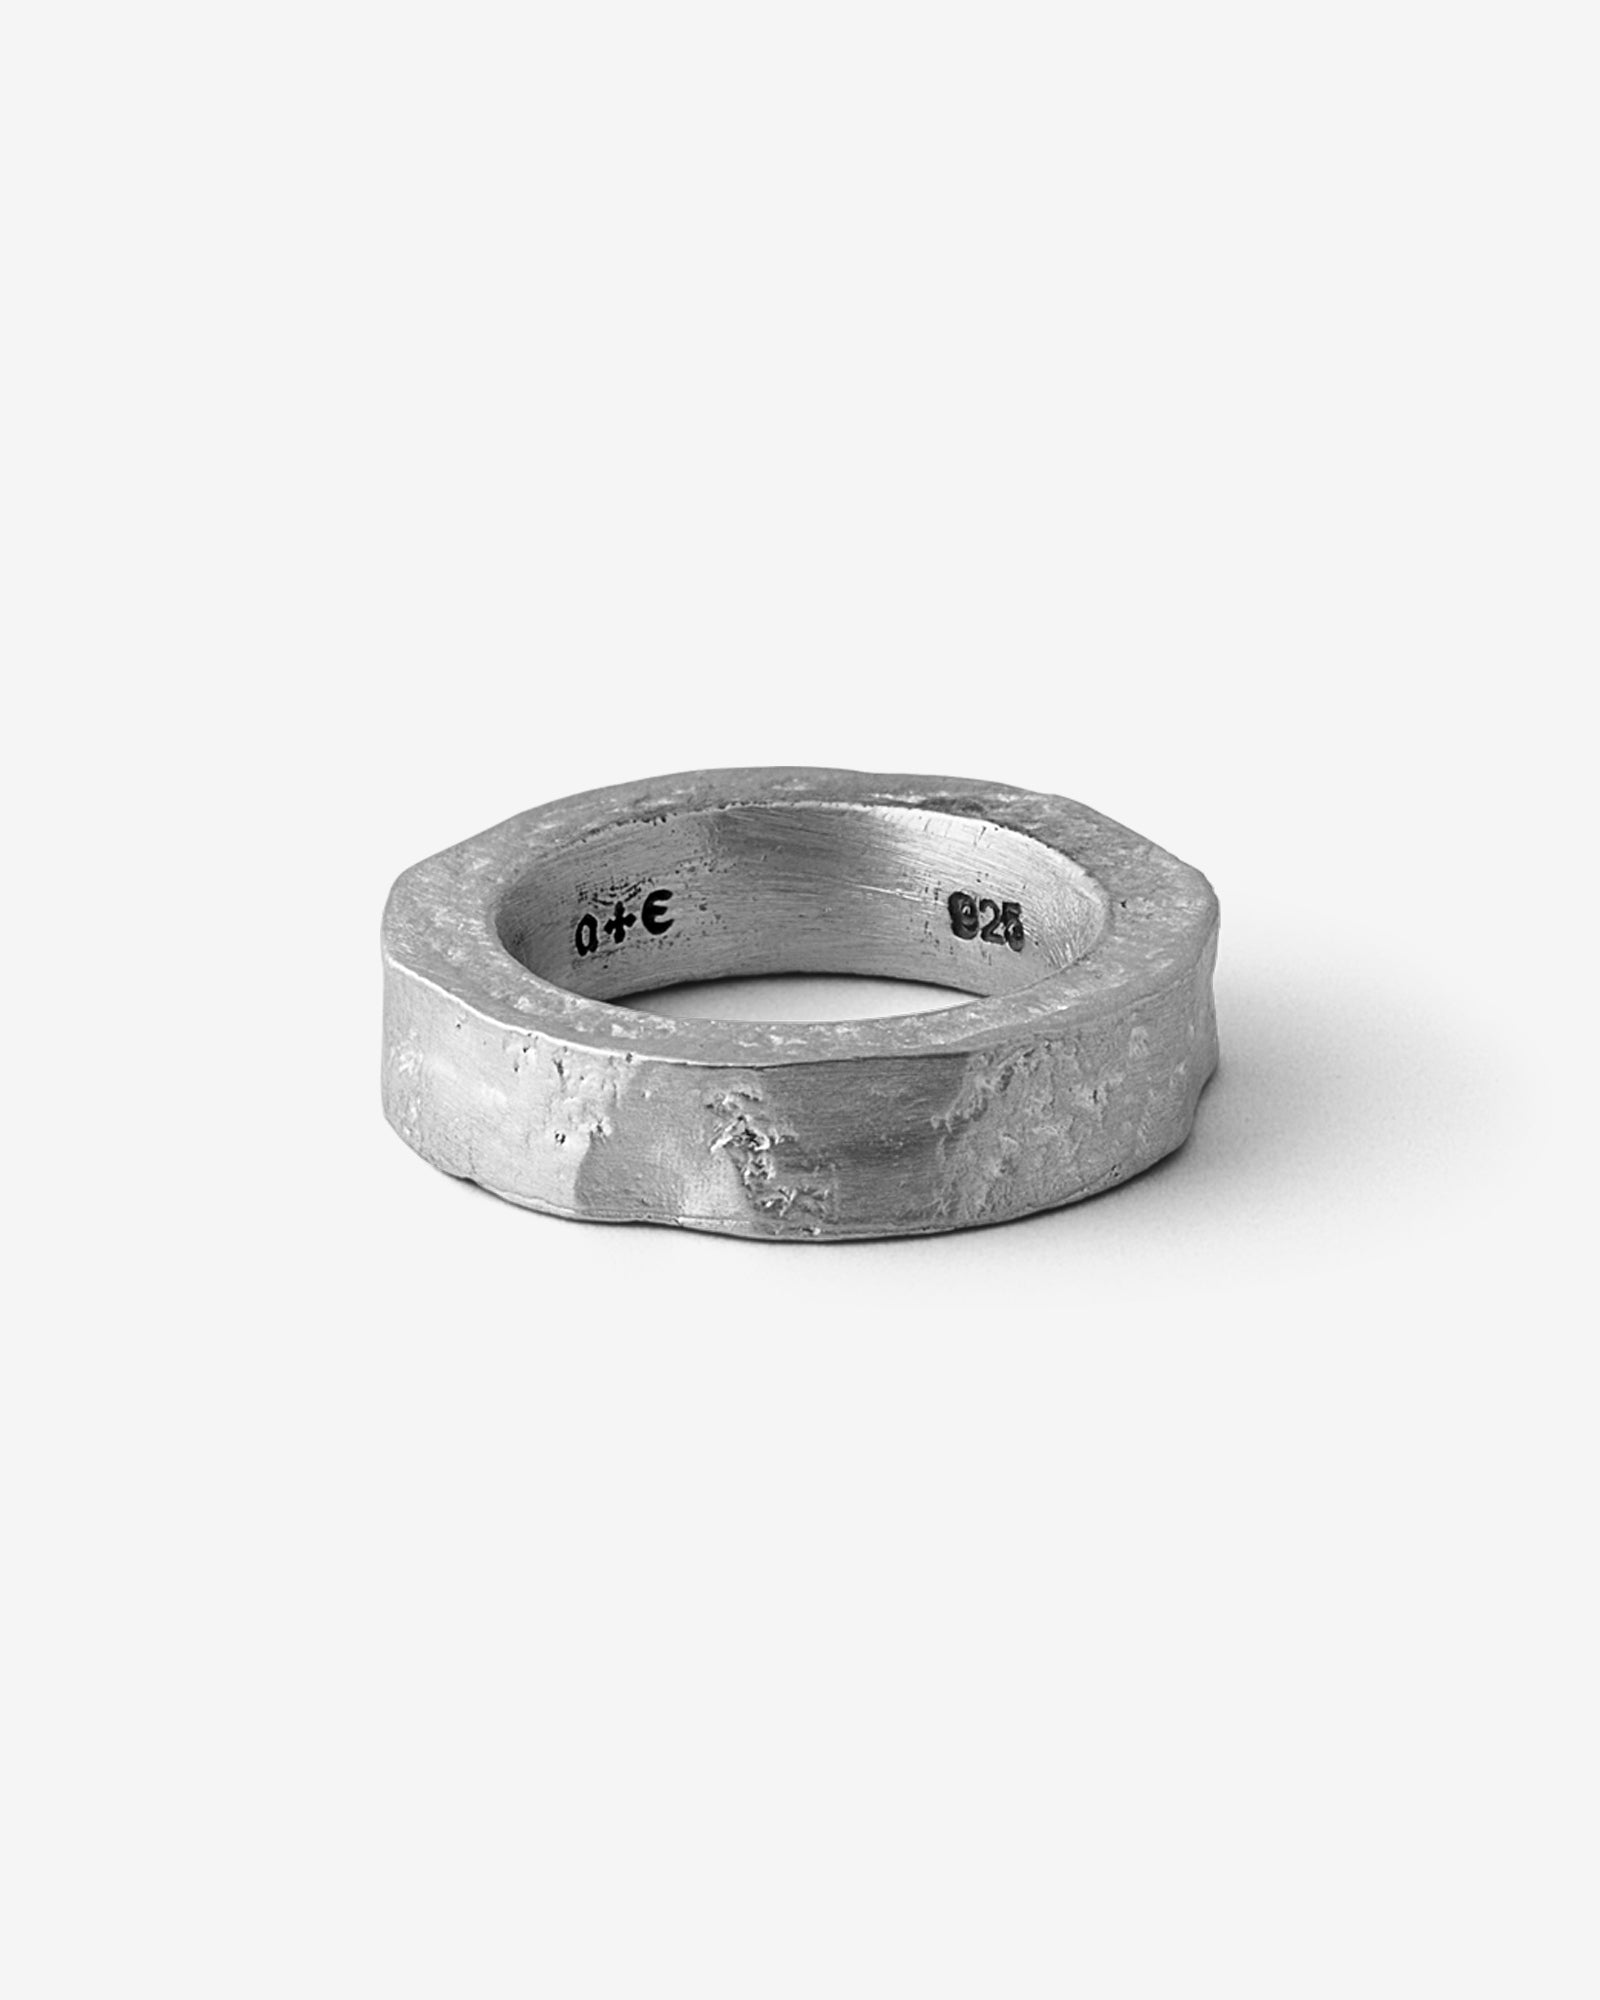 Harlequin Belt Ring in US6 - Alternative Rings by Ask & Embla